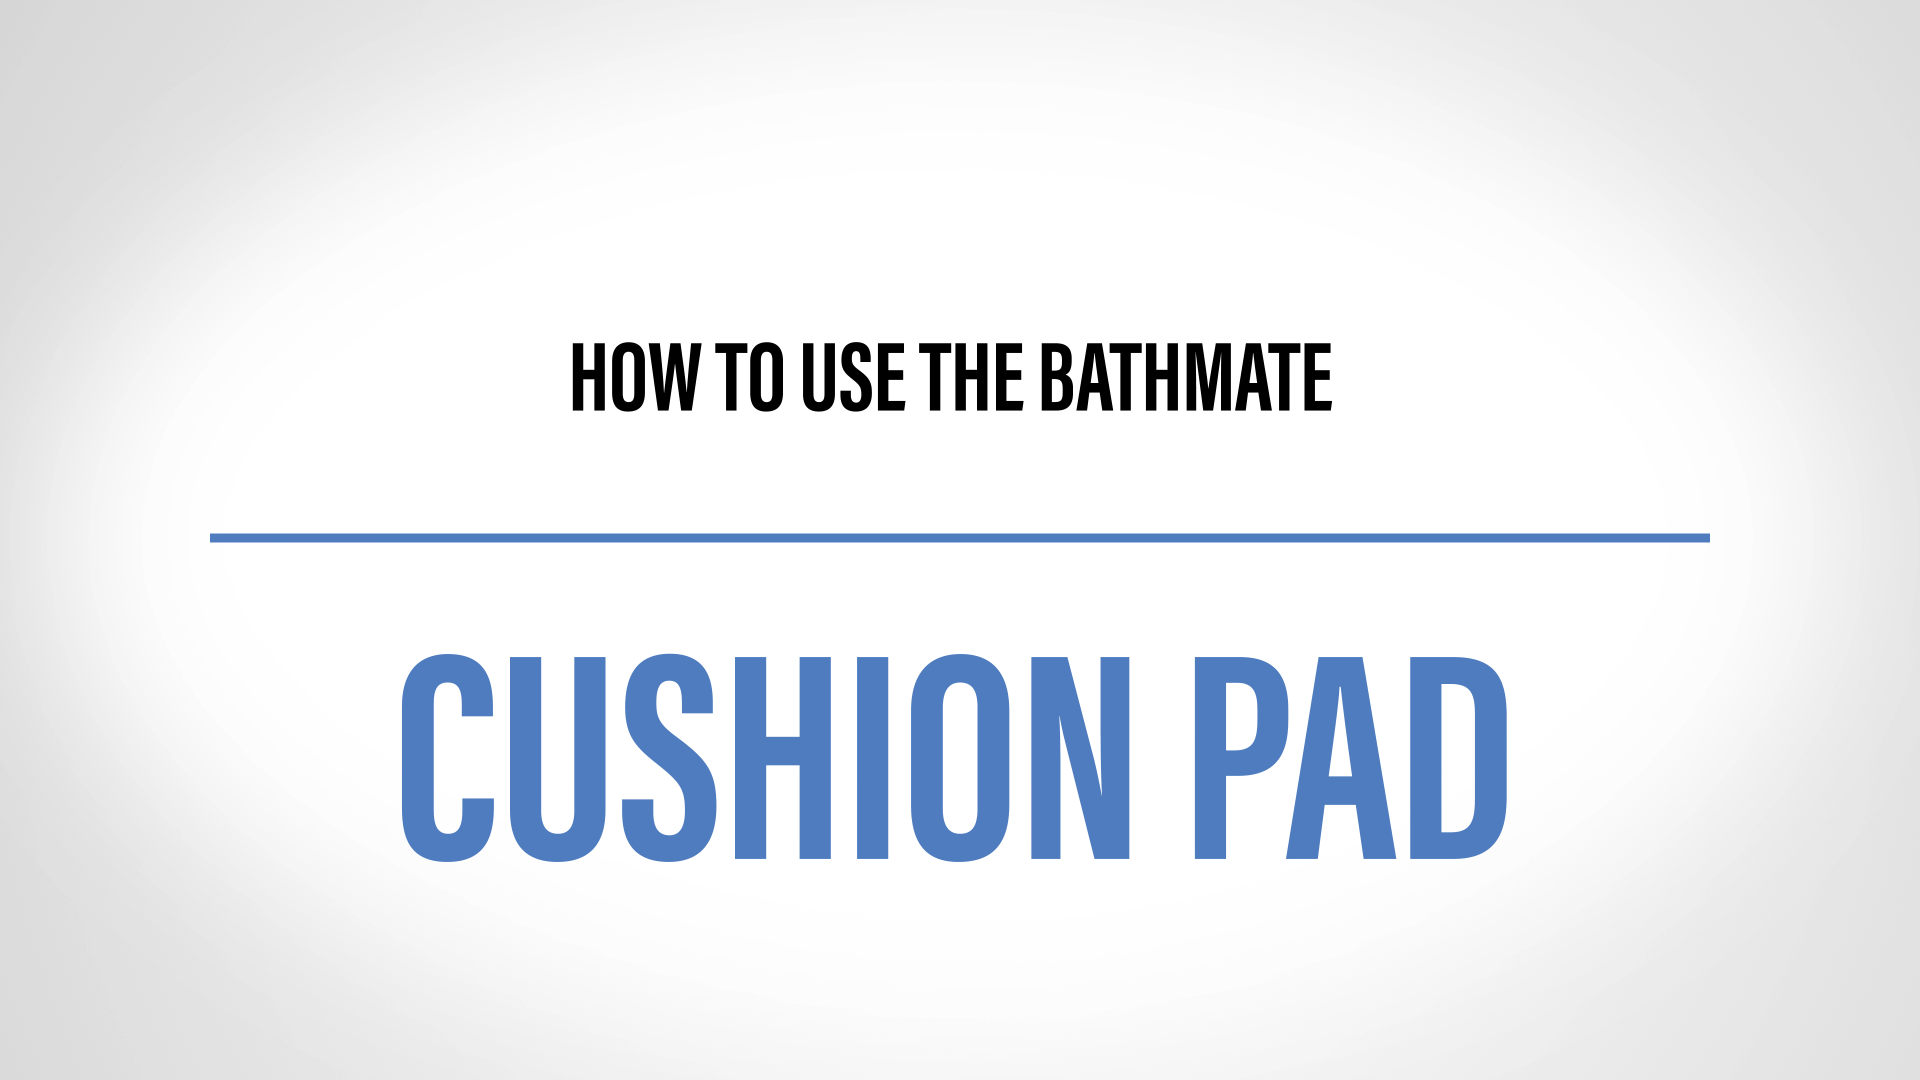 the bathmate cushion pad